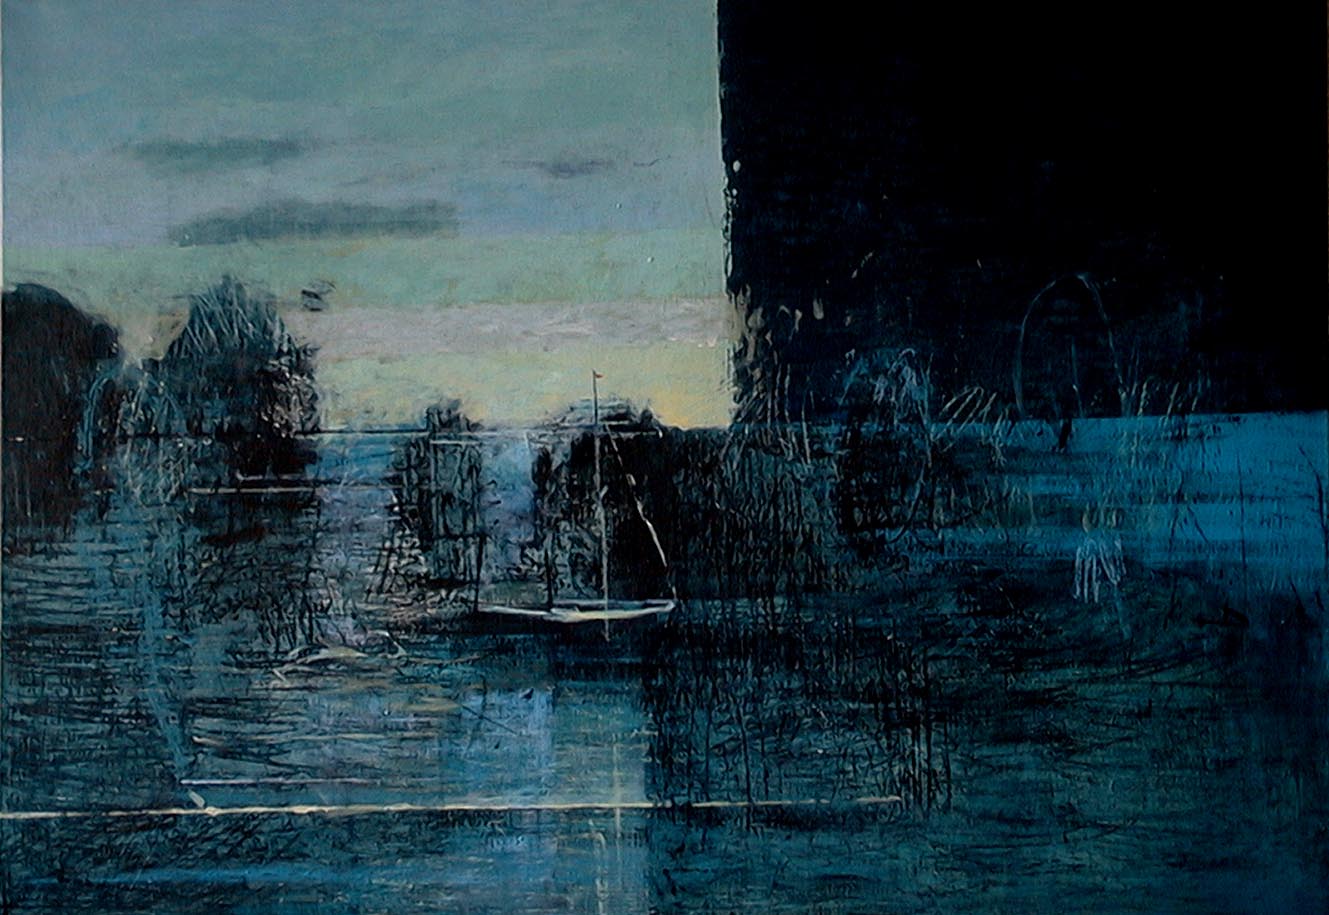 Mendrek Pawel 
"Life of the Horizon 18 Uhr 05", 2002
acrylic / canvas
100 x 140 cm